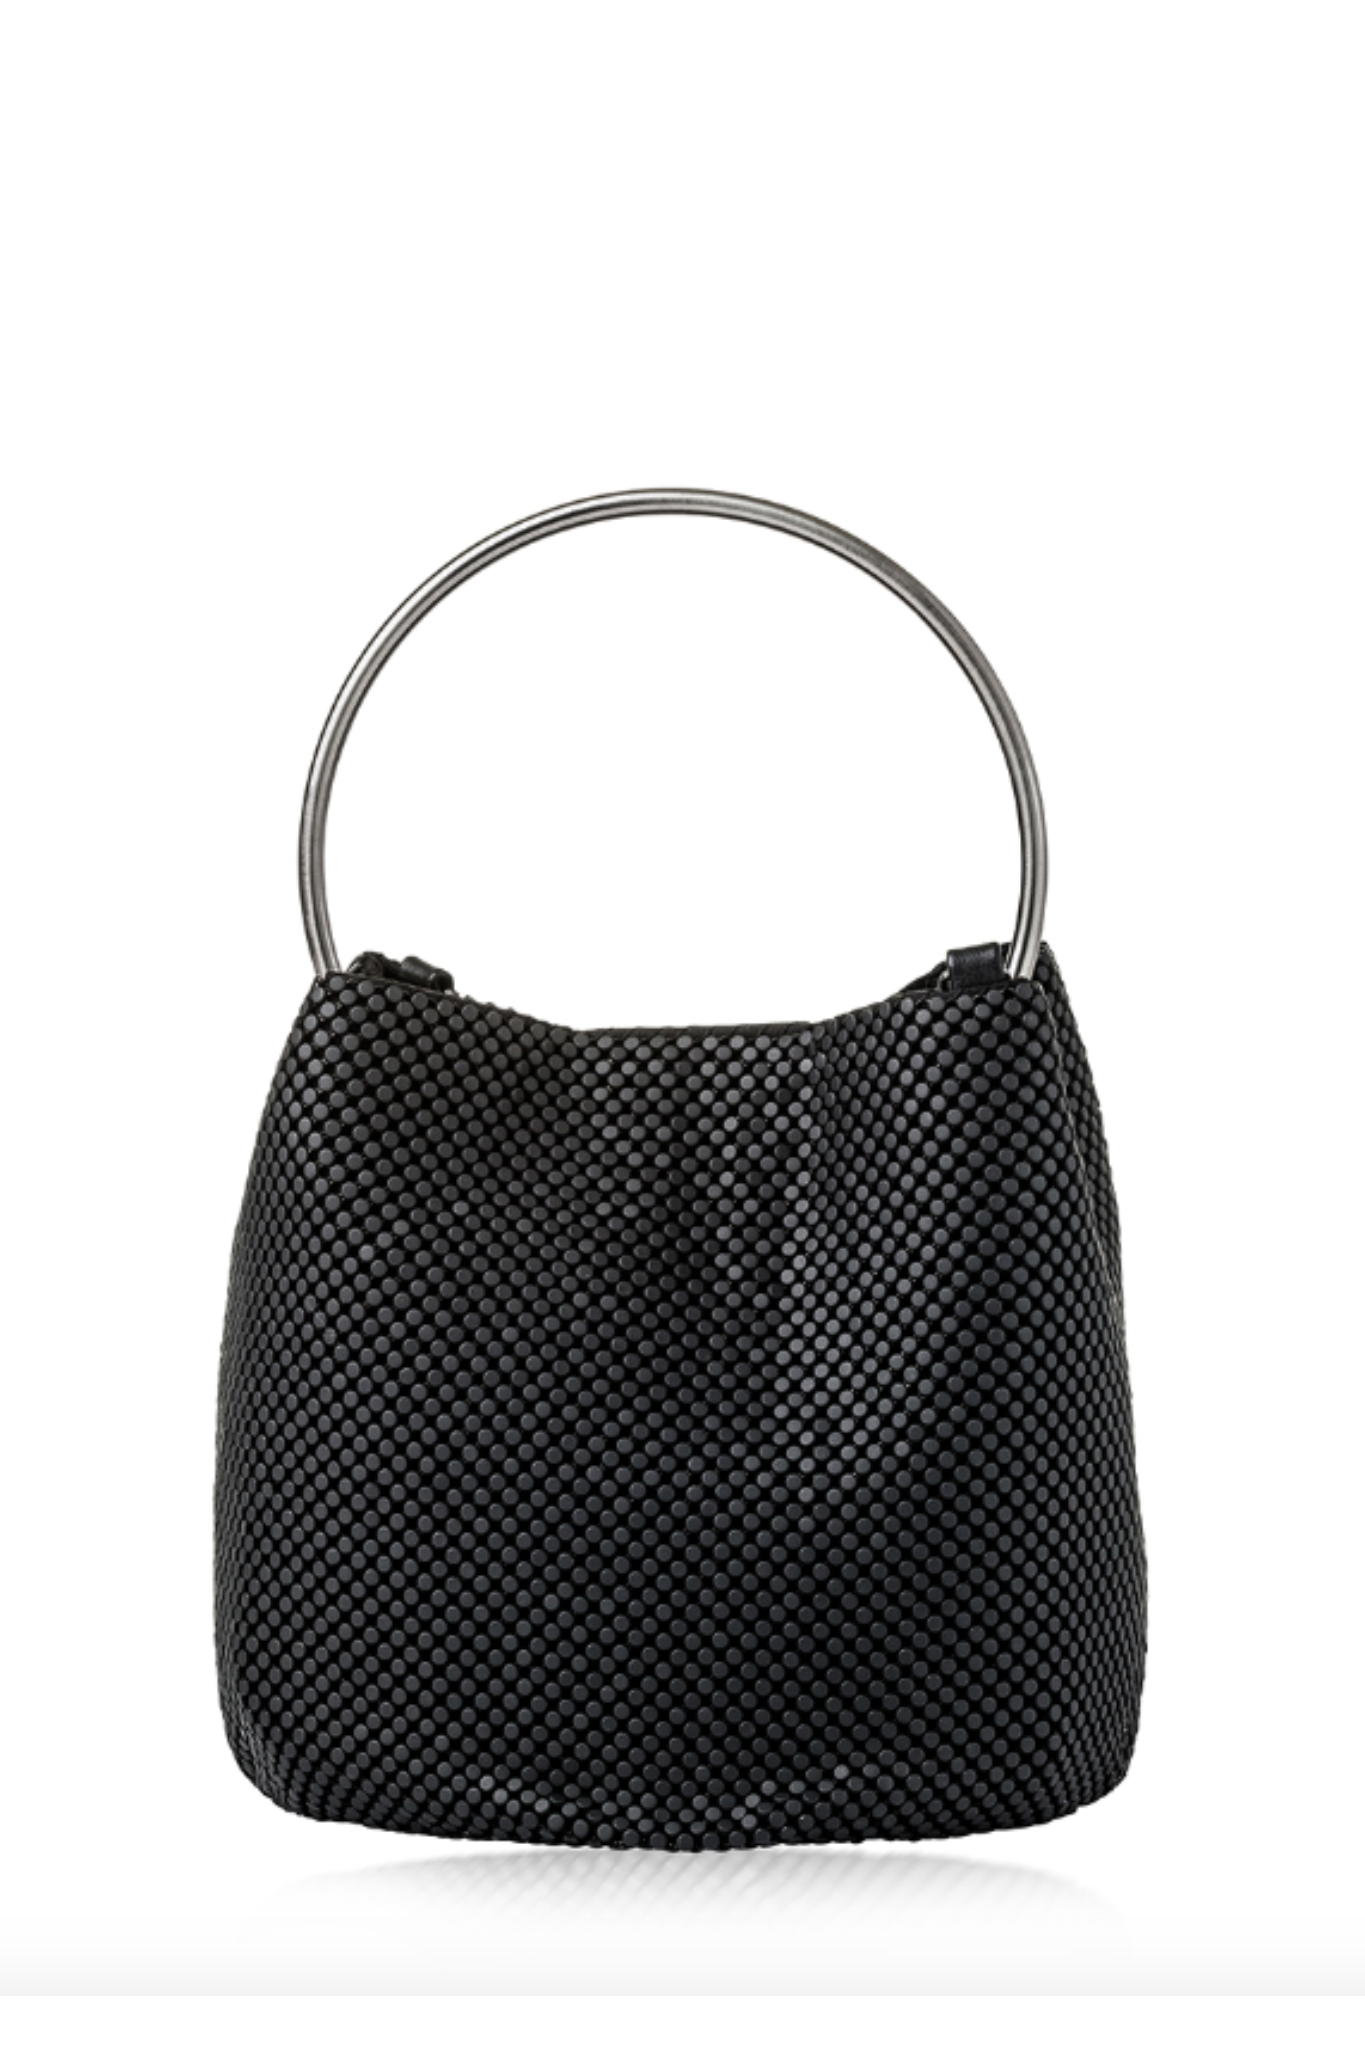 Crescent Bracelet Bag in Black by Whiting and Davis - RENTAL